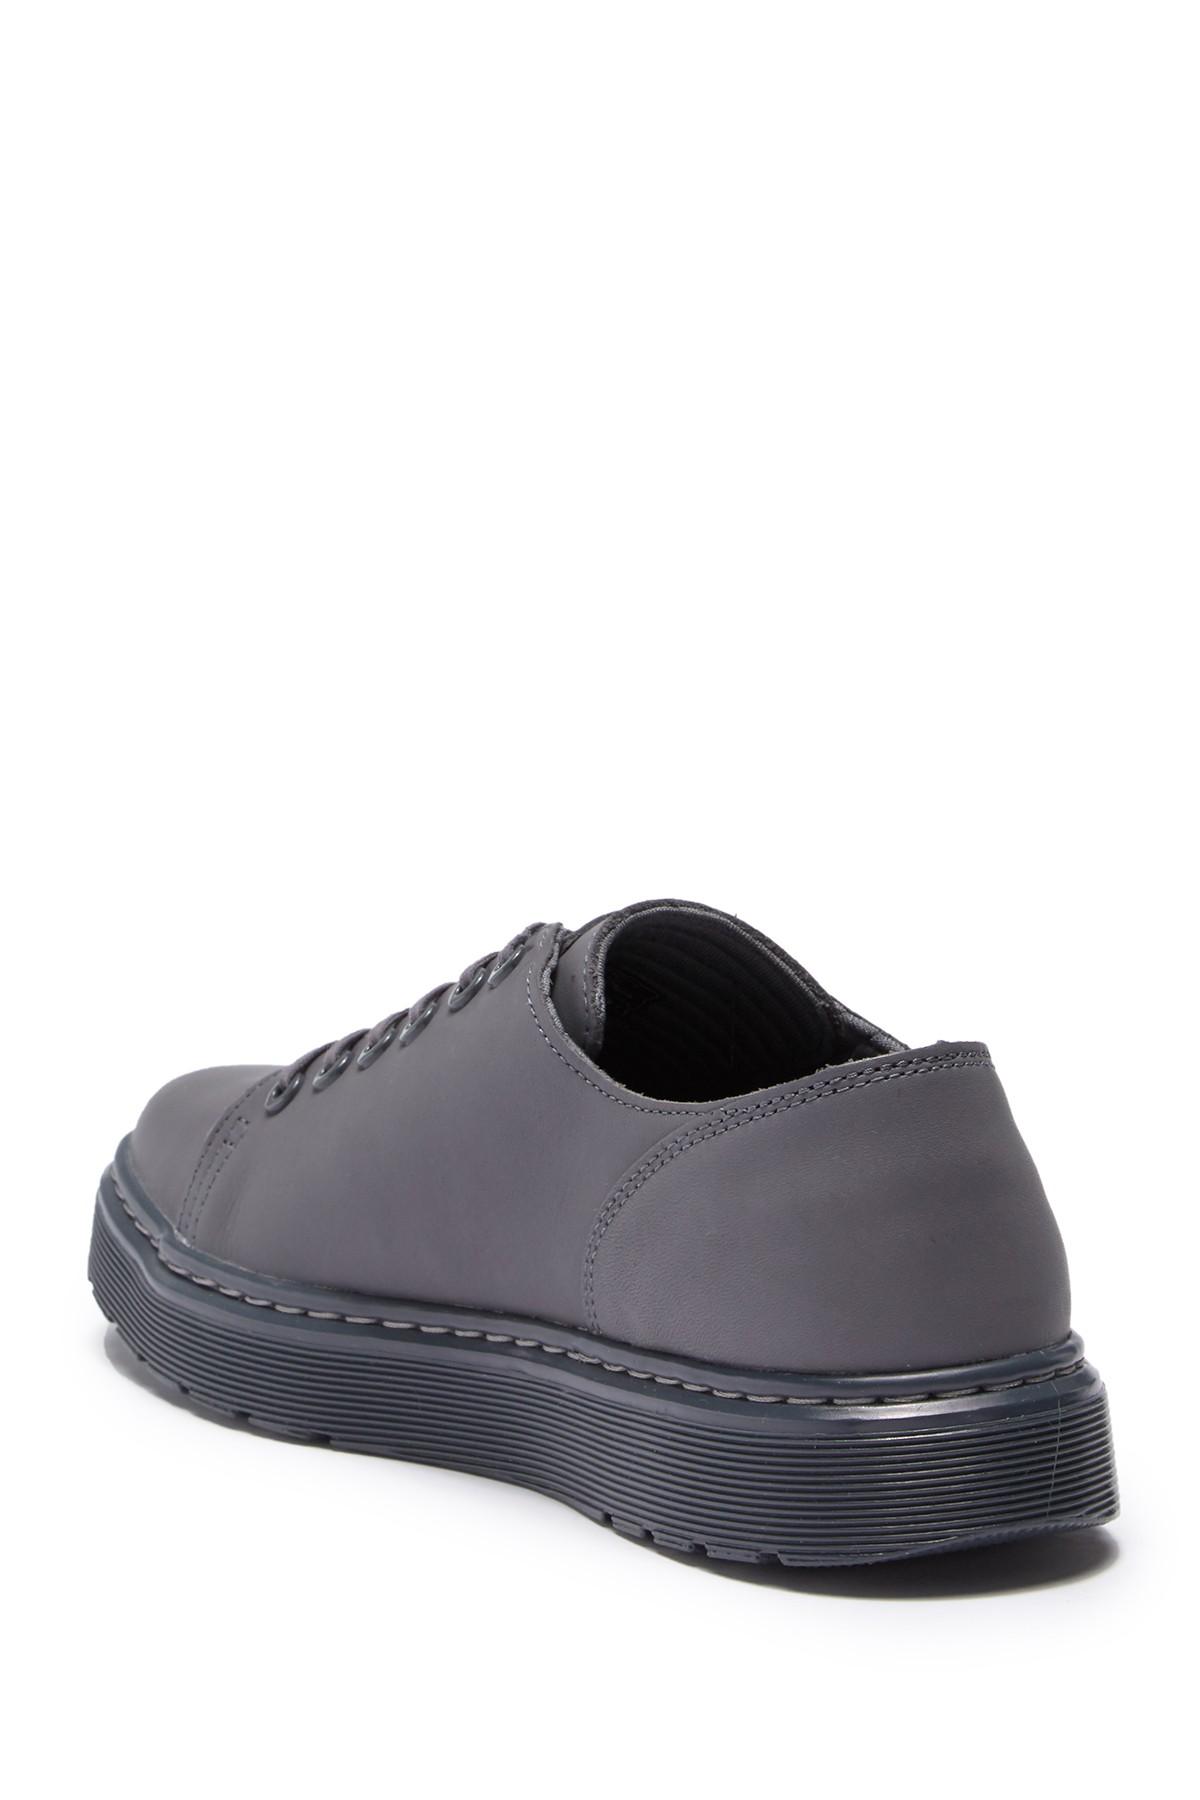 Dr. Martens Dante Leather Sneaker in Gray for Men | Lyst